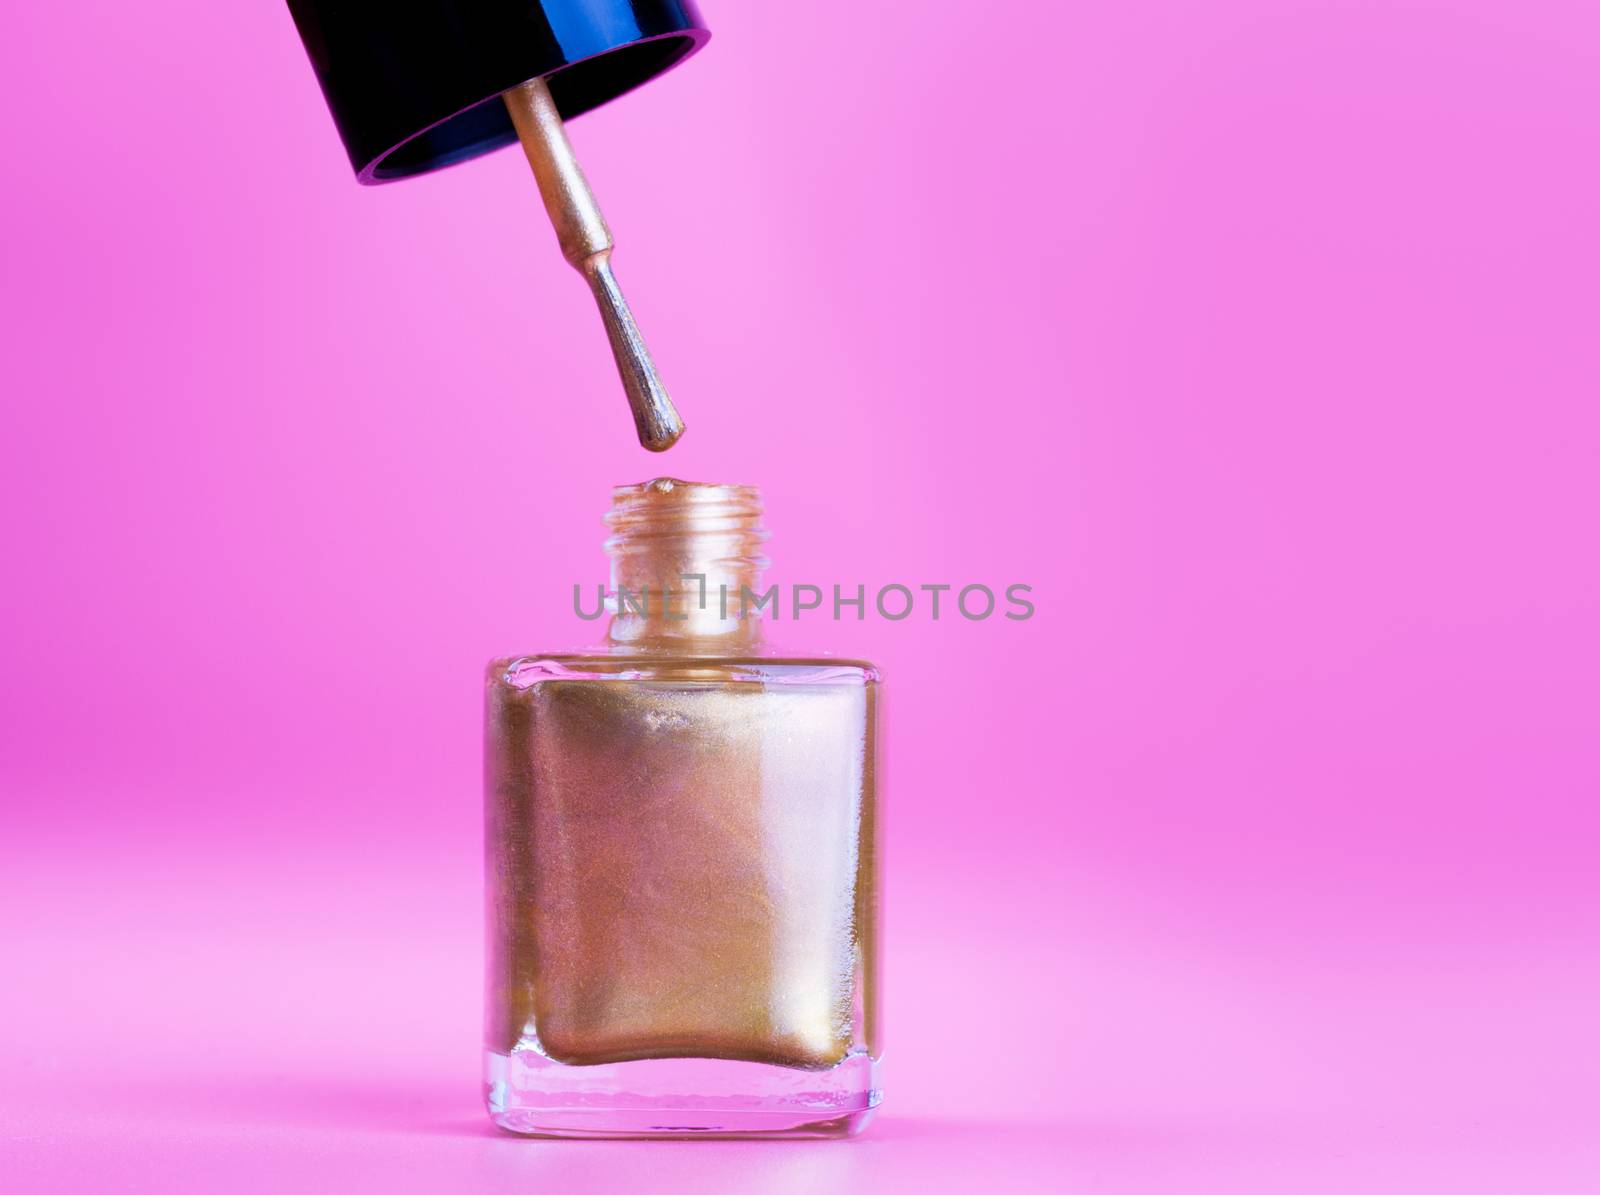 Opened bottle of gold nail polish, pink background